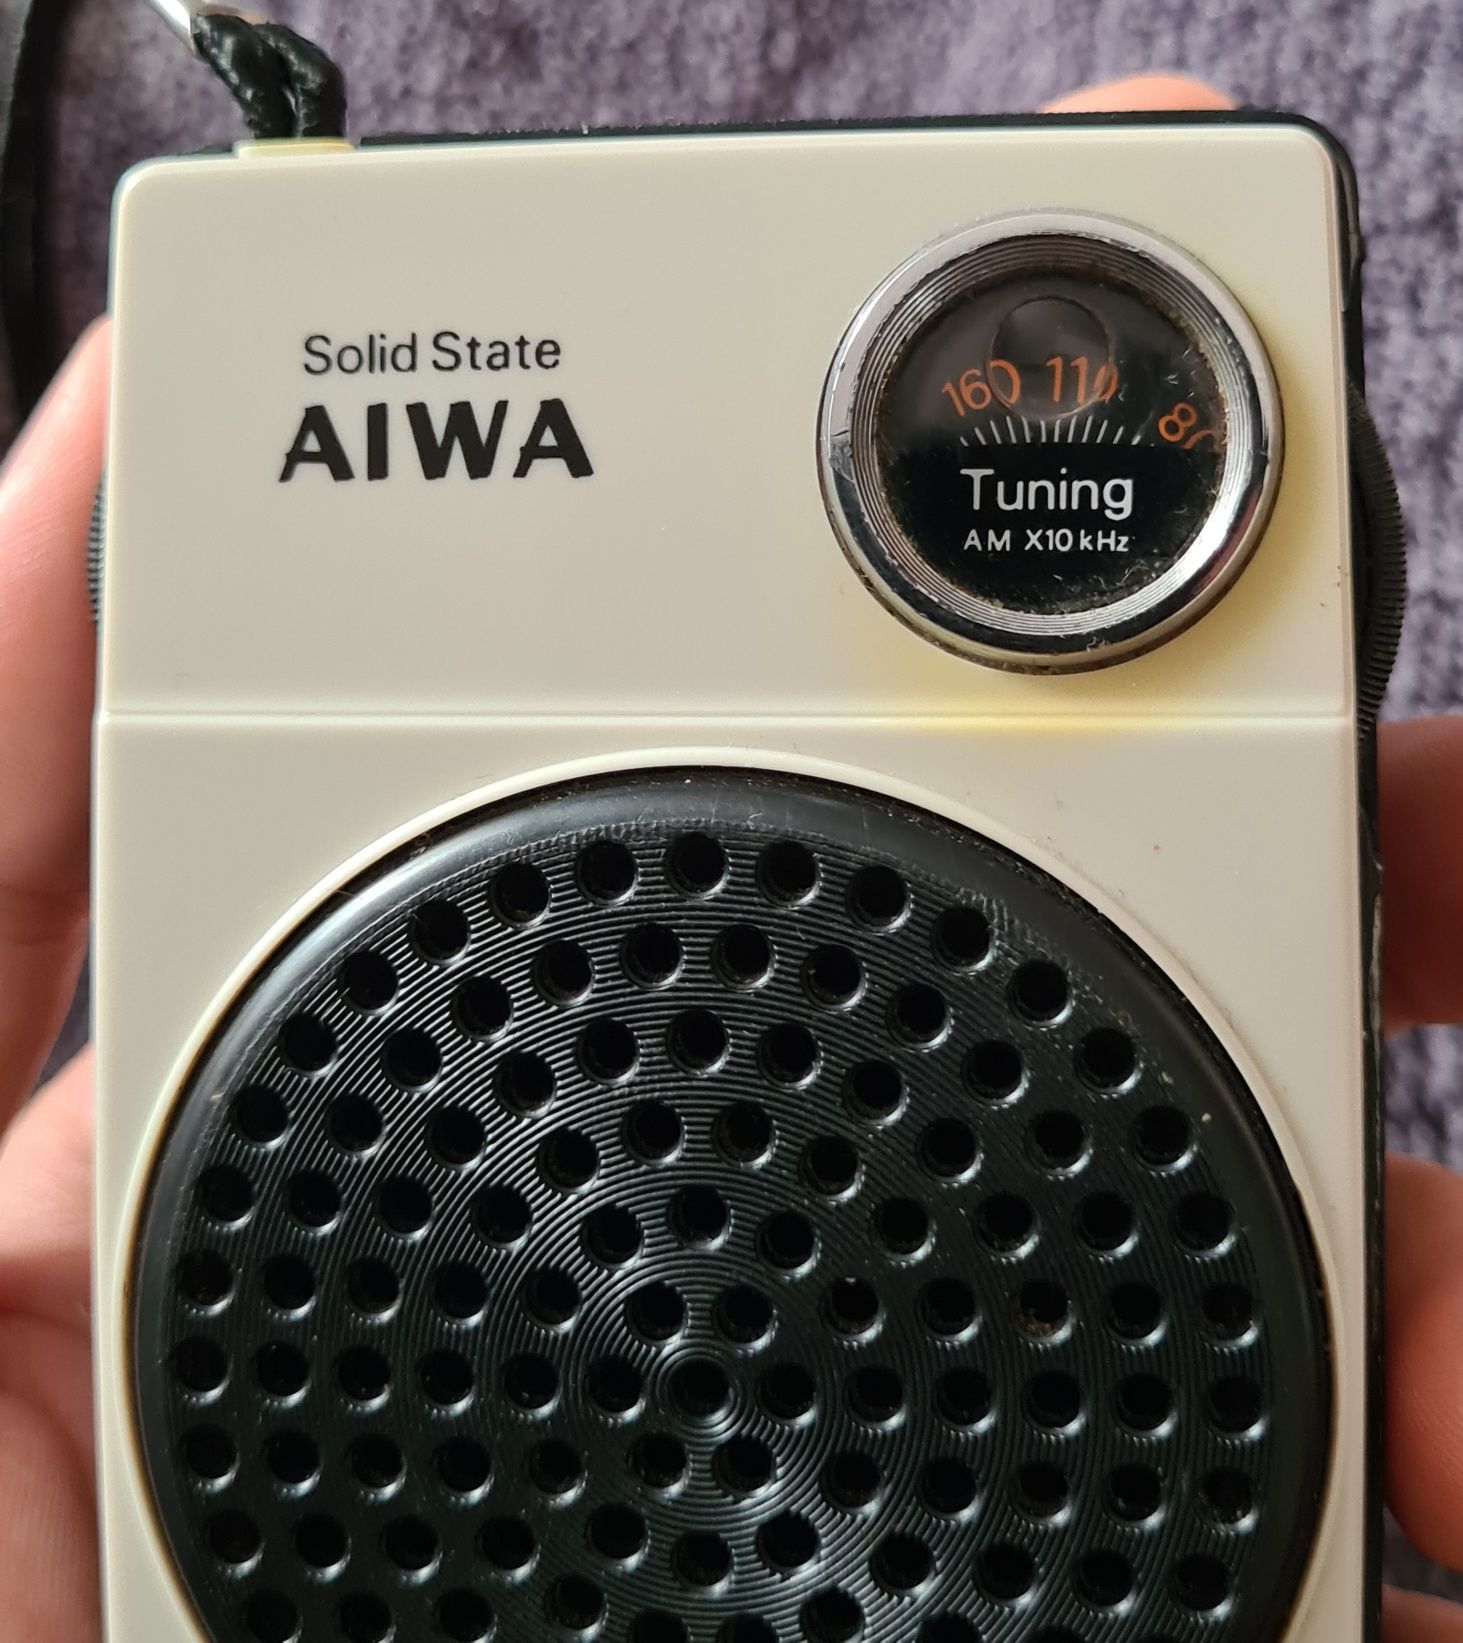 Radio Portabil Aiwa Solid State AR-777 Transistor Japan